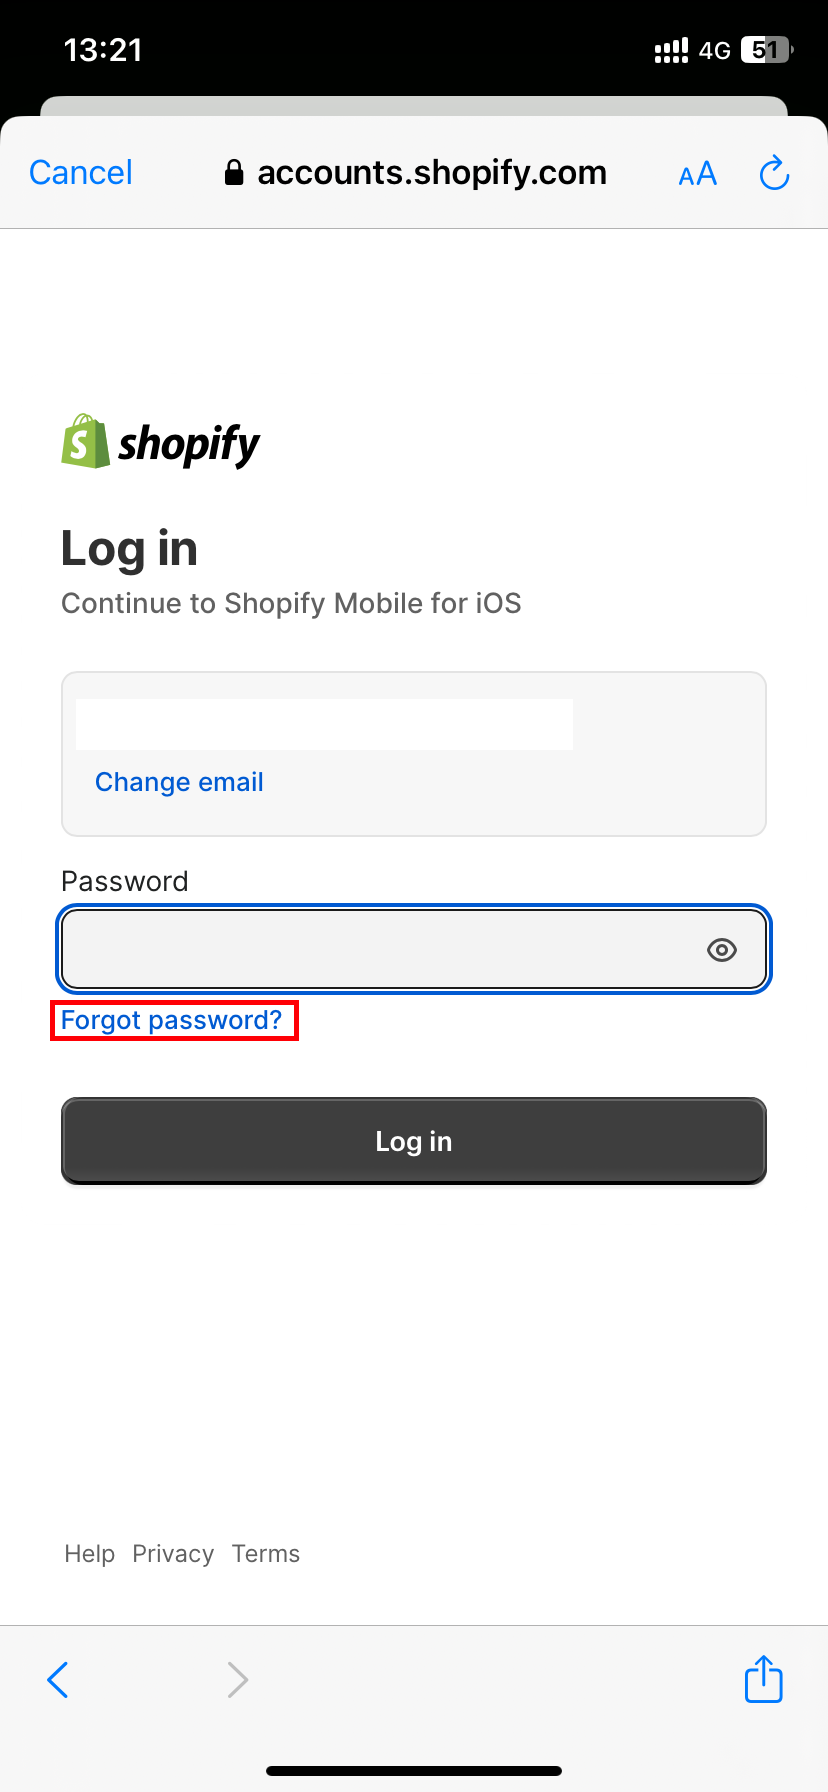 click “Forgot password”